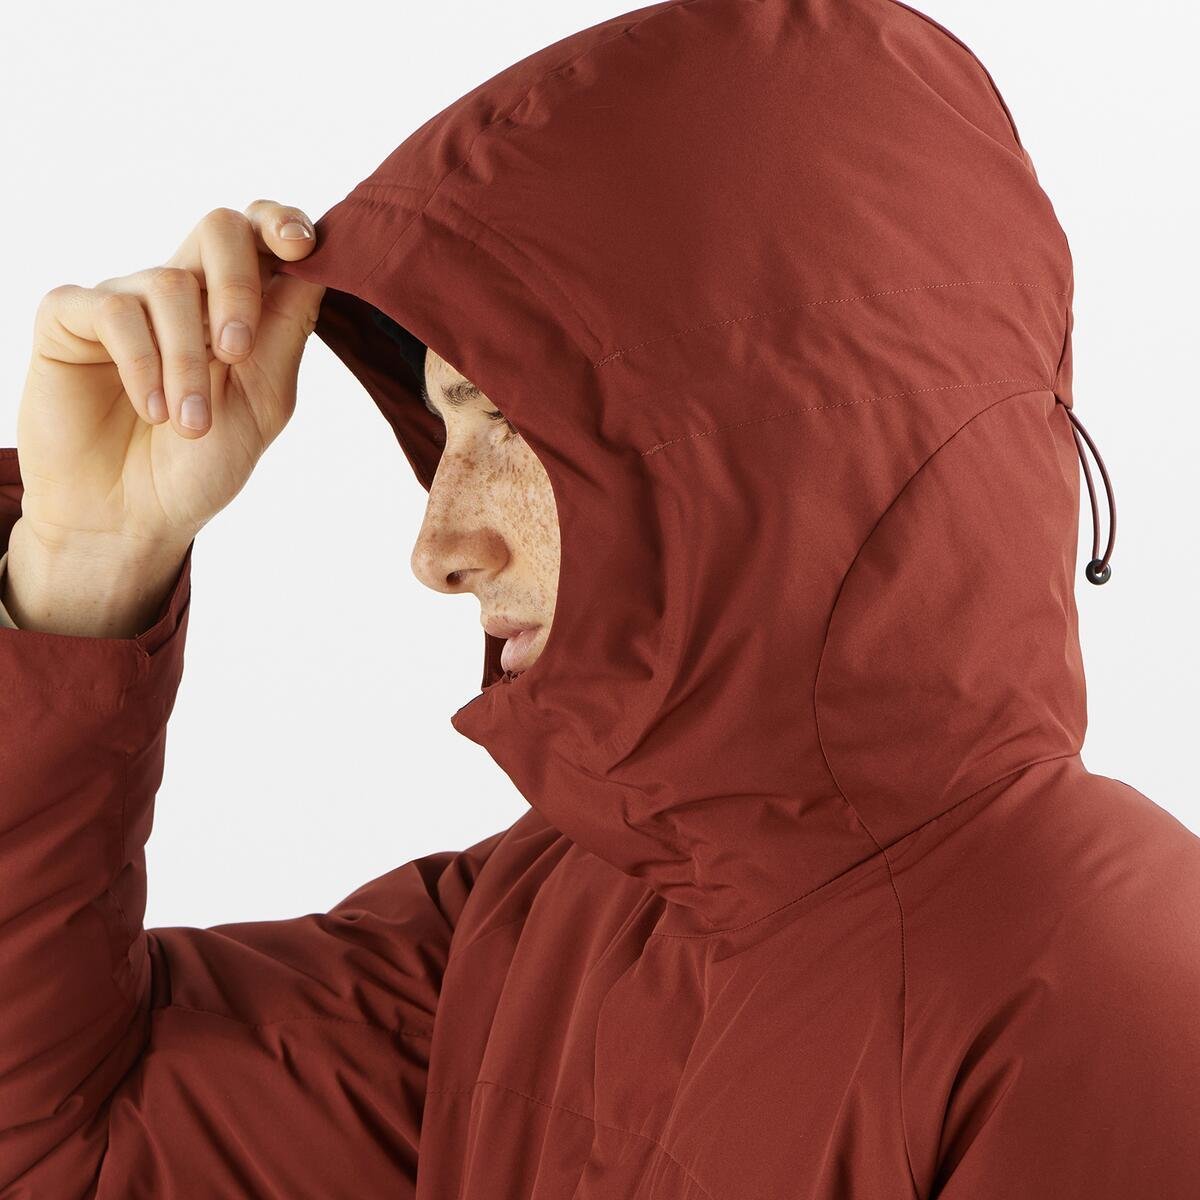 Bunda Salomon Outlife GTX Ins Jacket M - červená